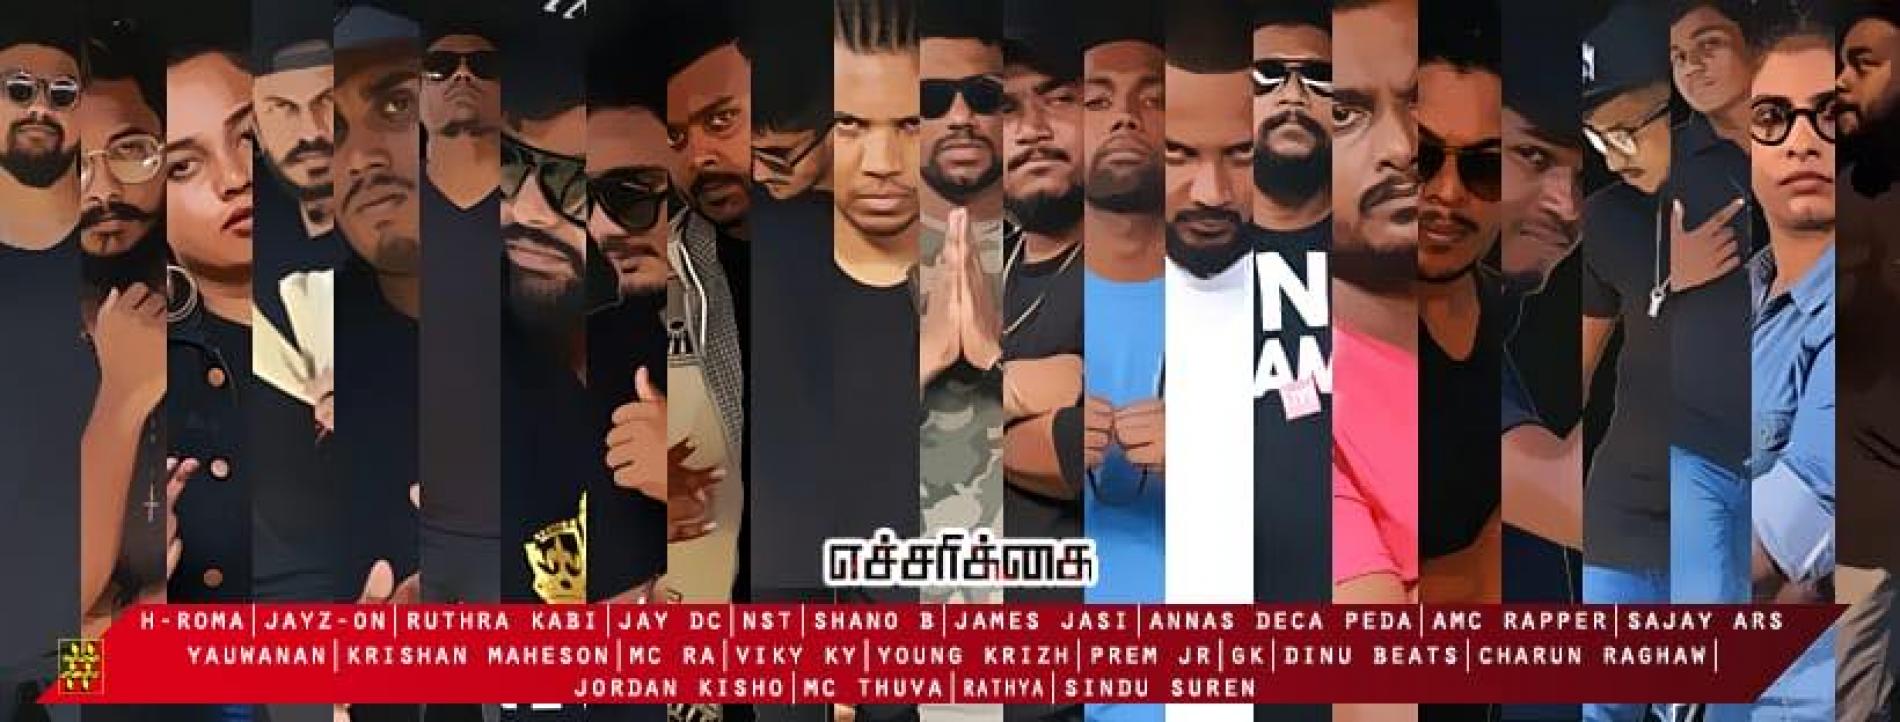 Echcharikkai Official Music Video – The World’s Biggest Tamil Rap Cypher